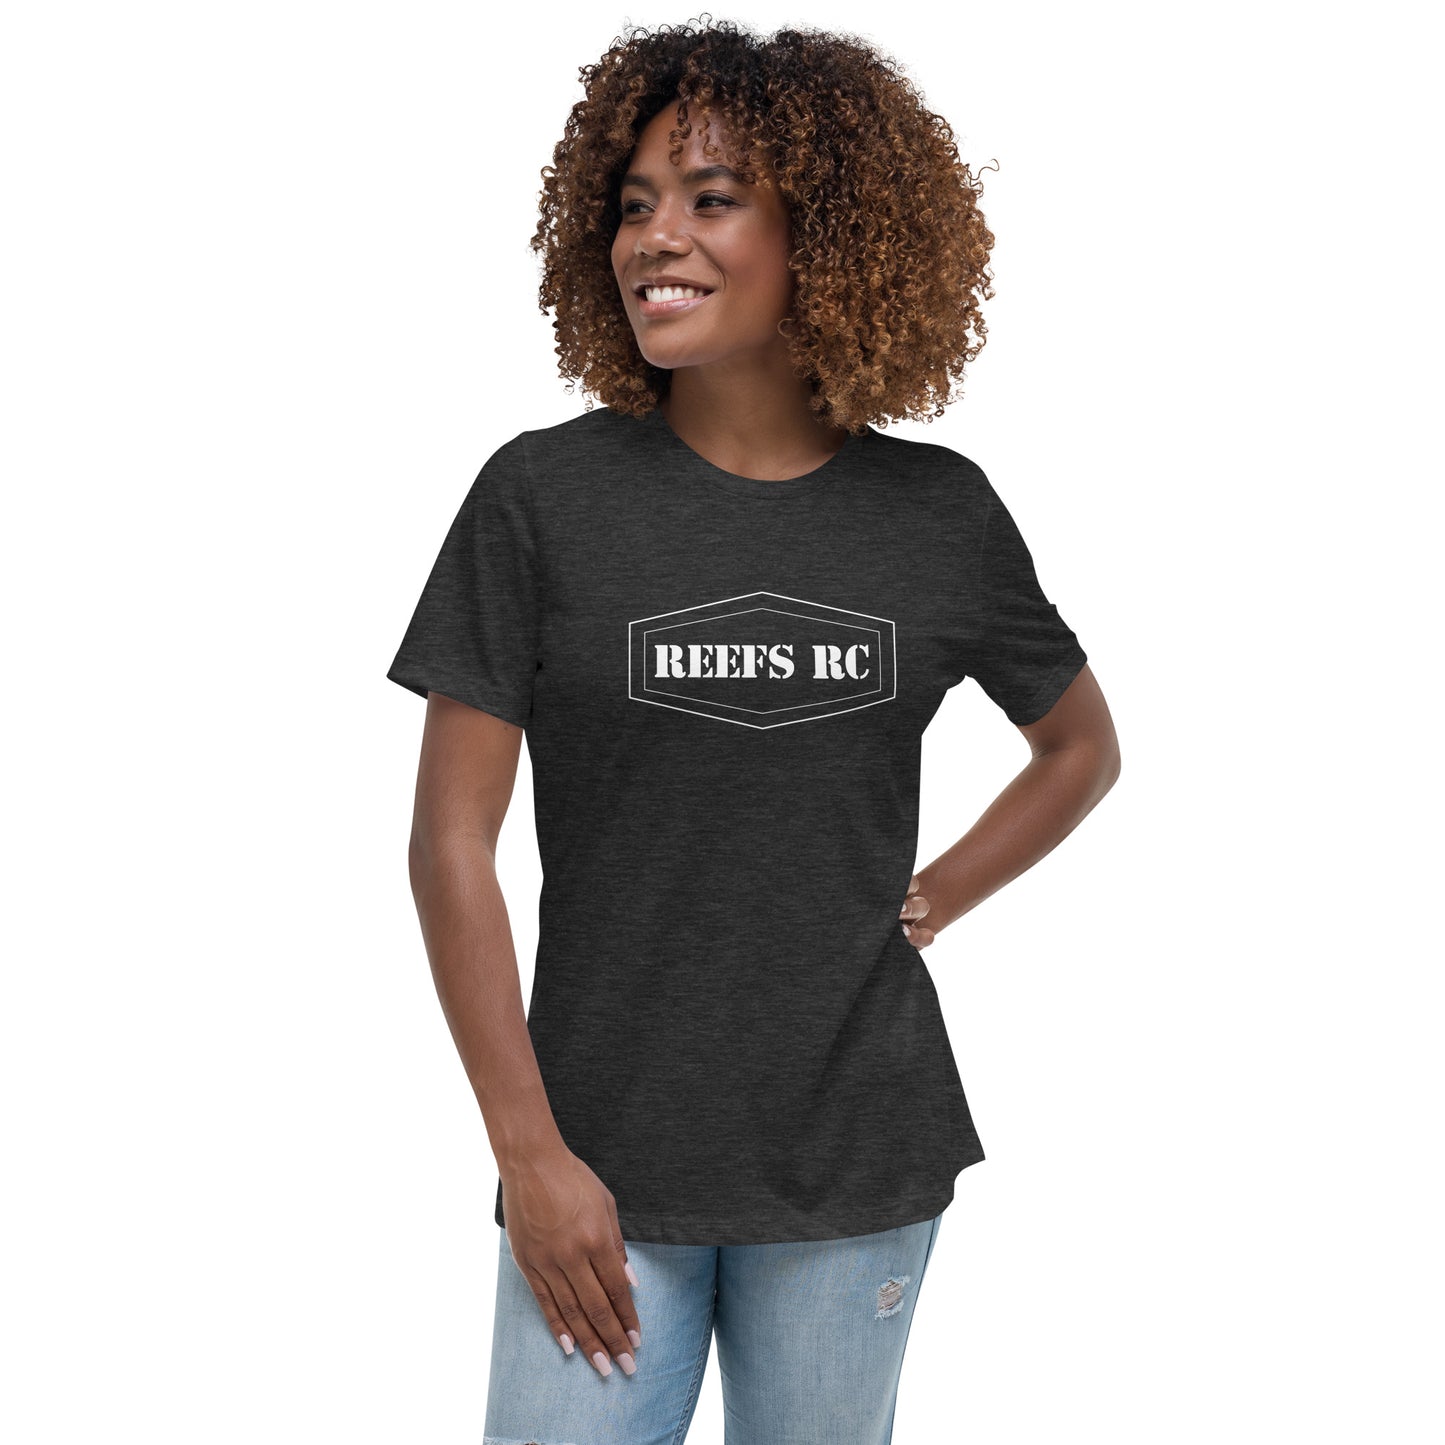 Reefs RC Classic Women's Relaxed T-Shirt (Bella+Canvas)